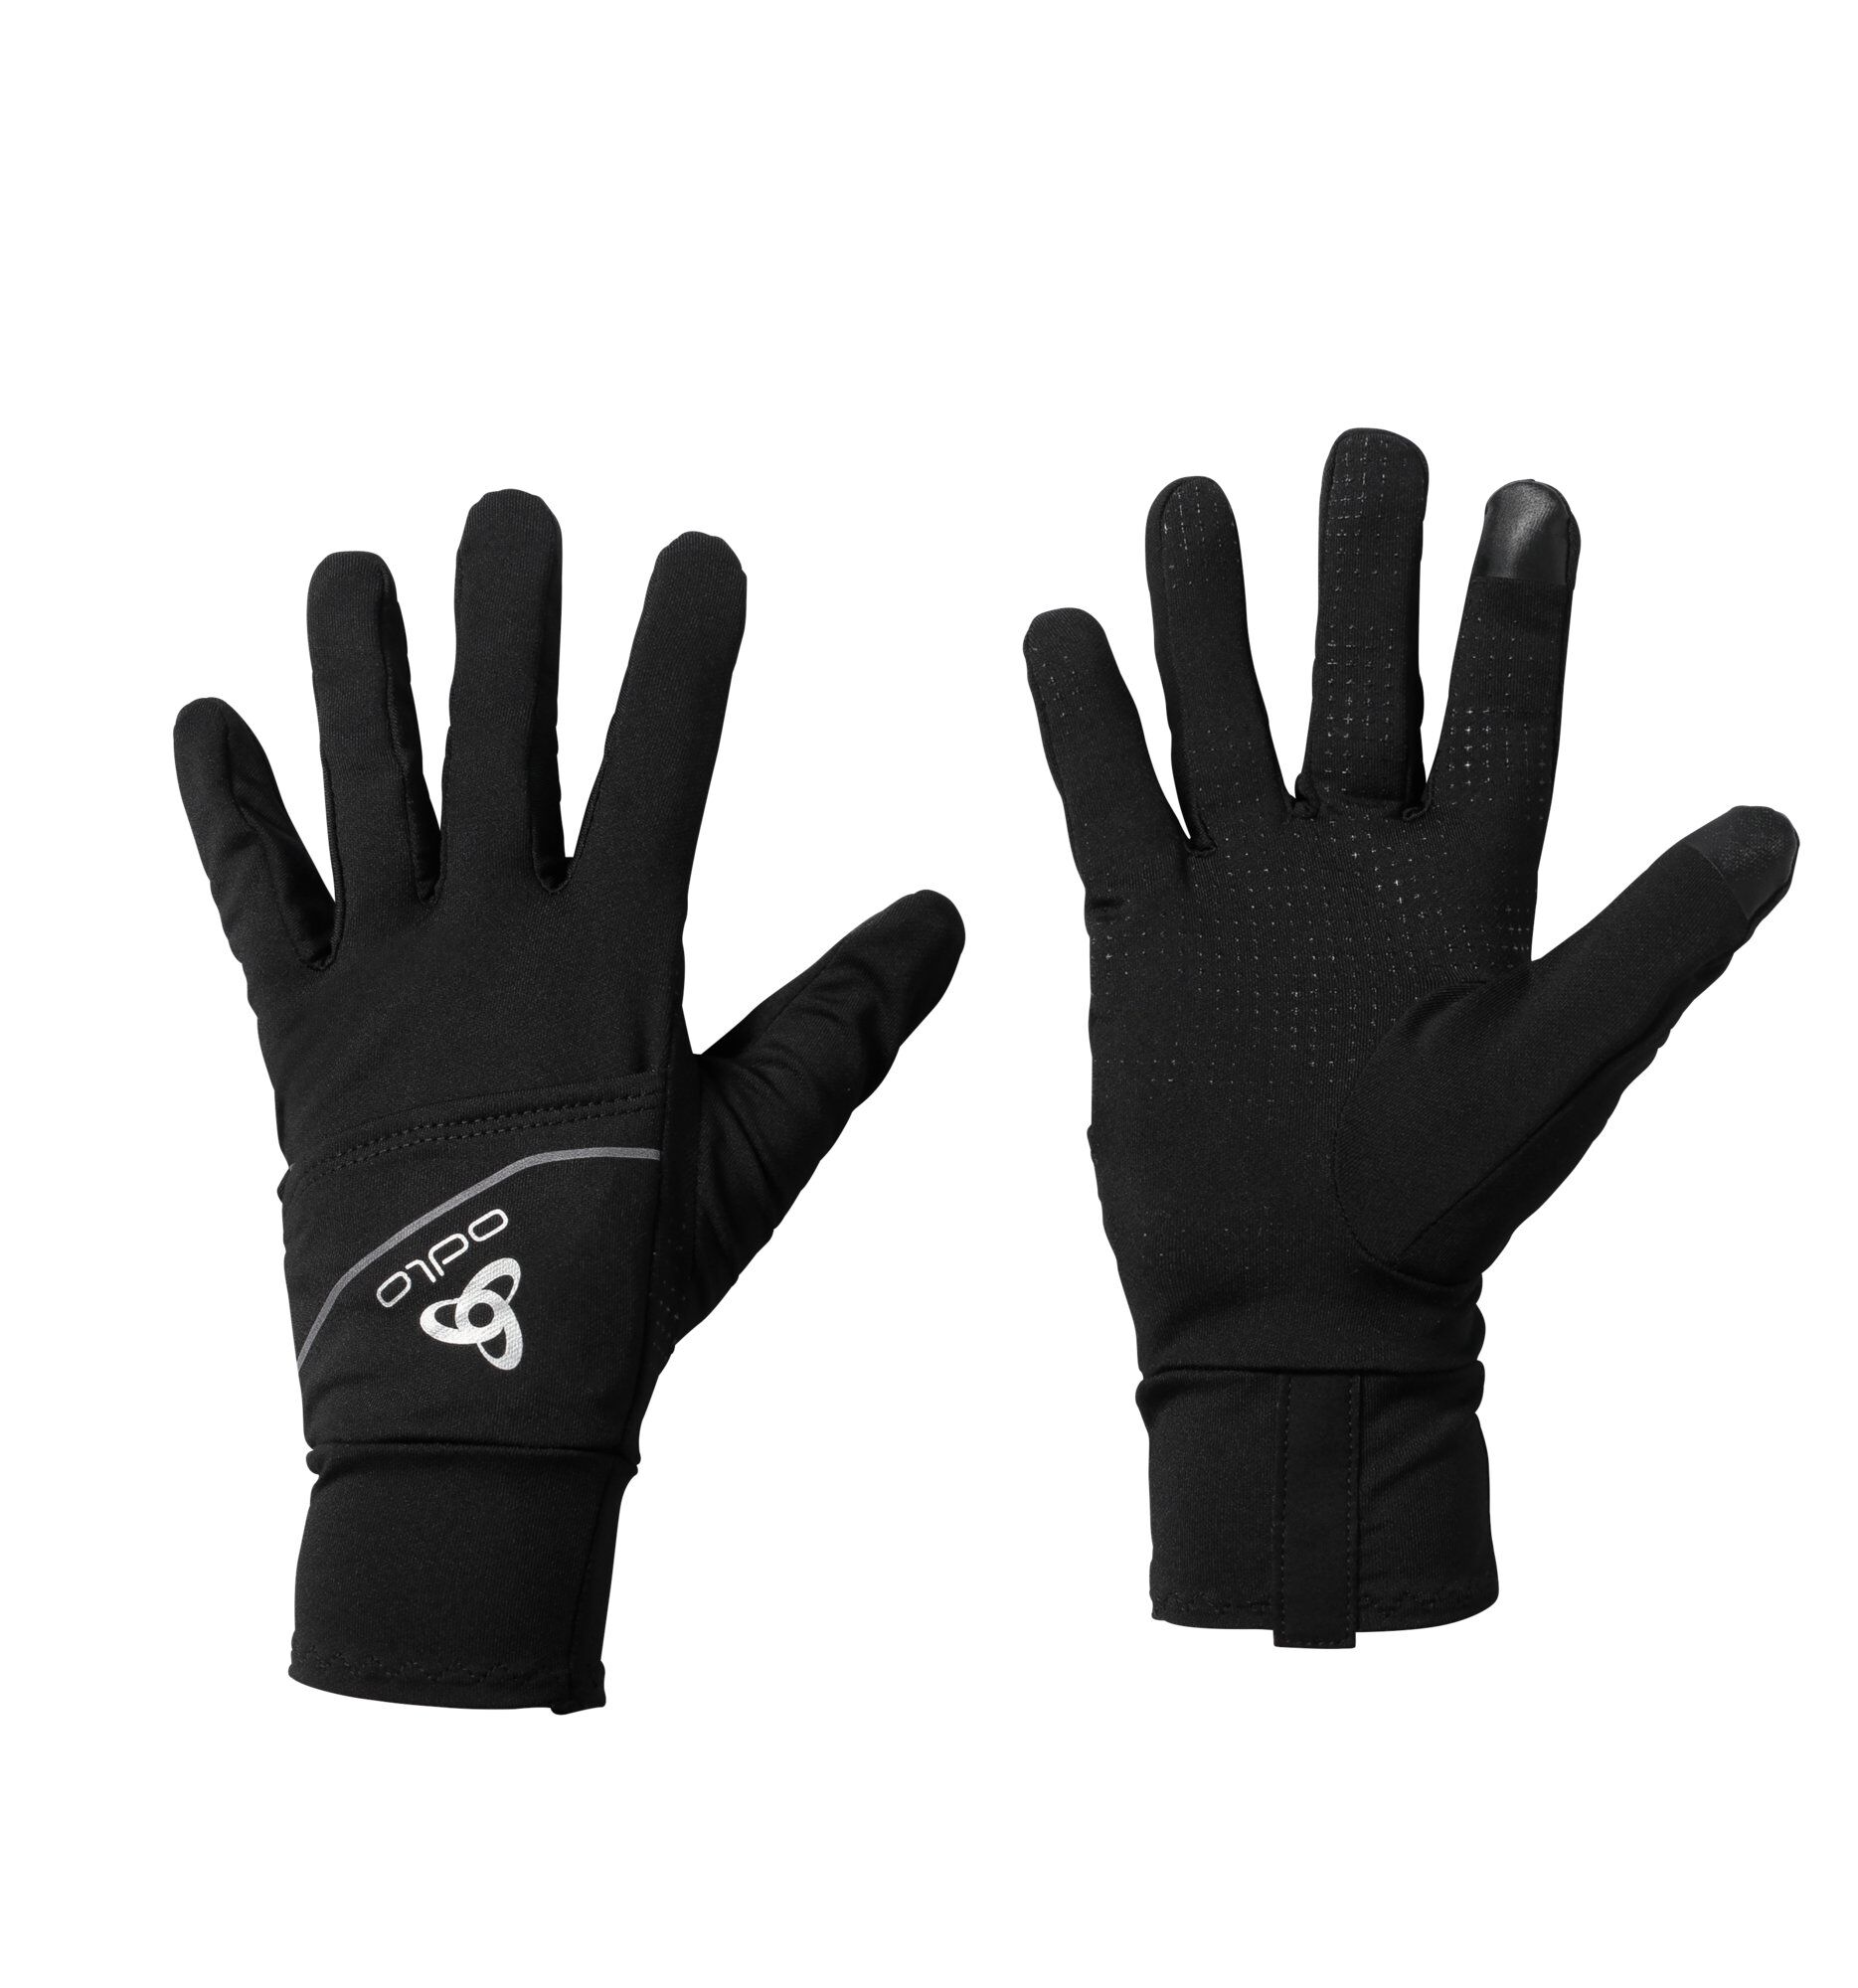 Odlo Intensity Cover Safety Light Glove - Handschuhe